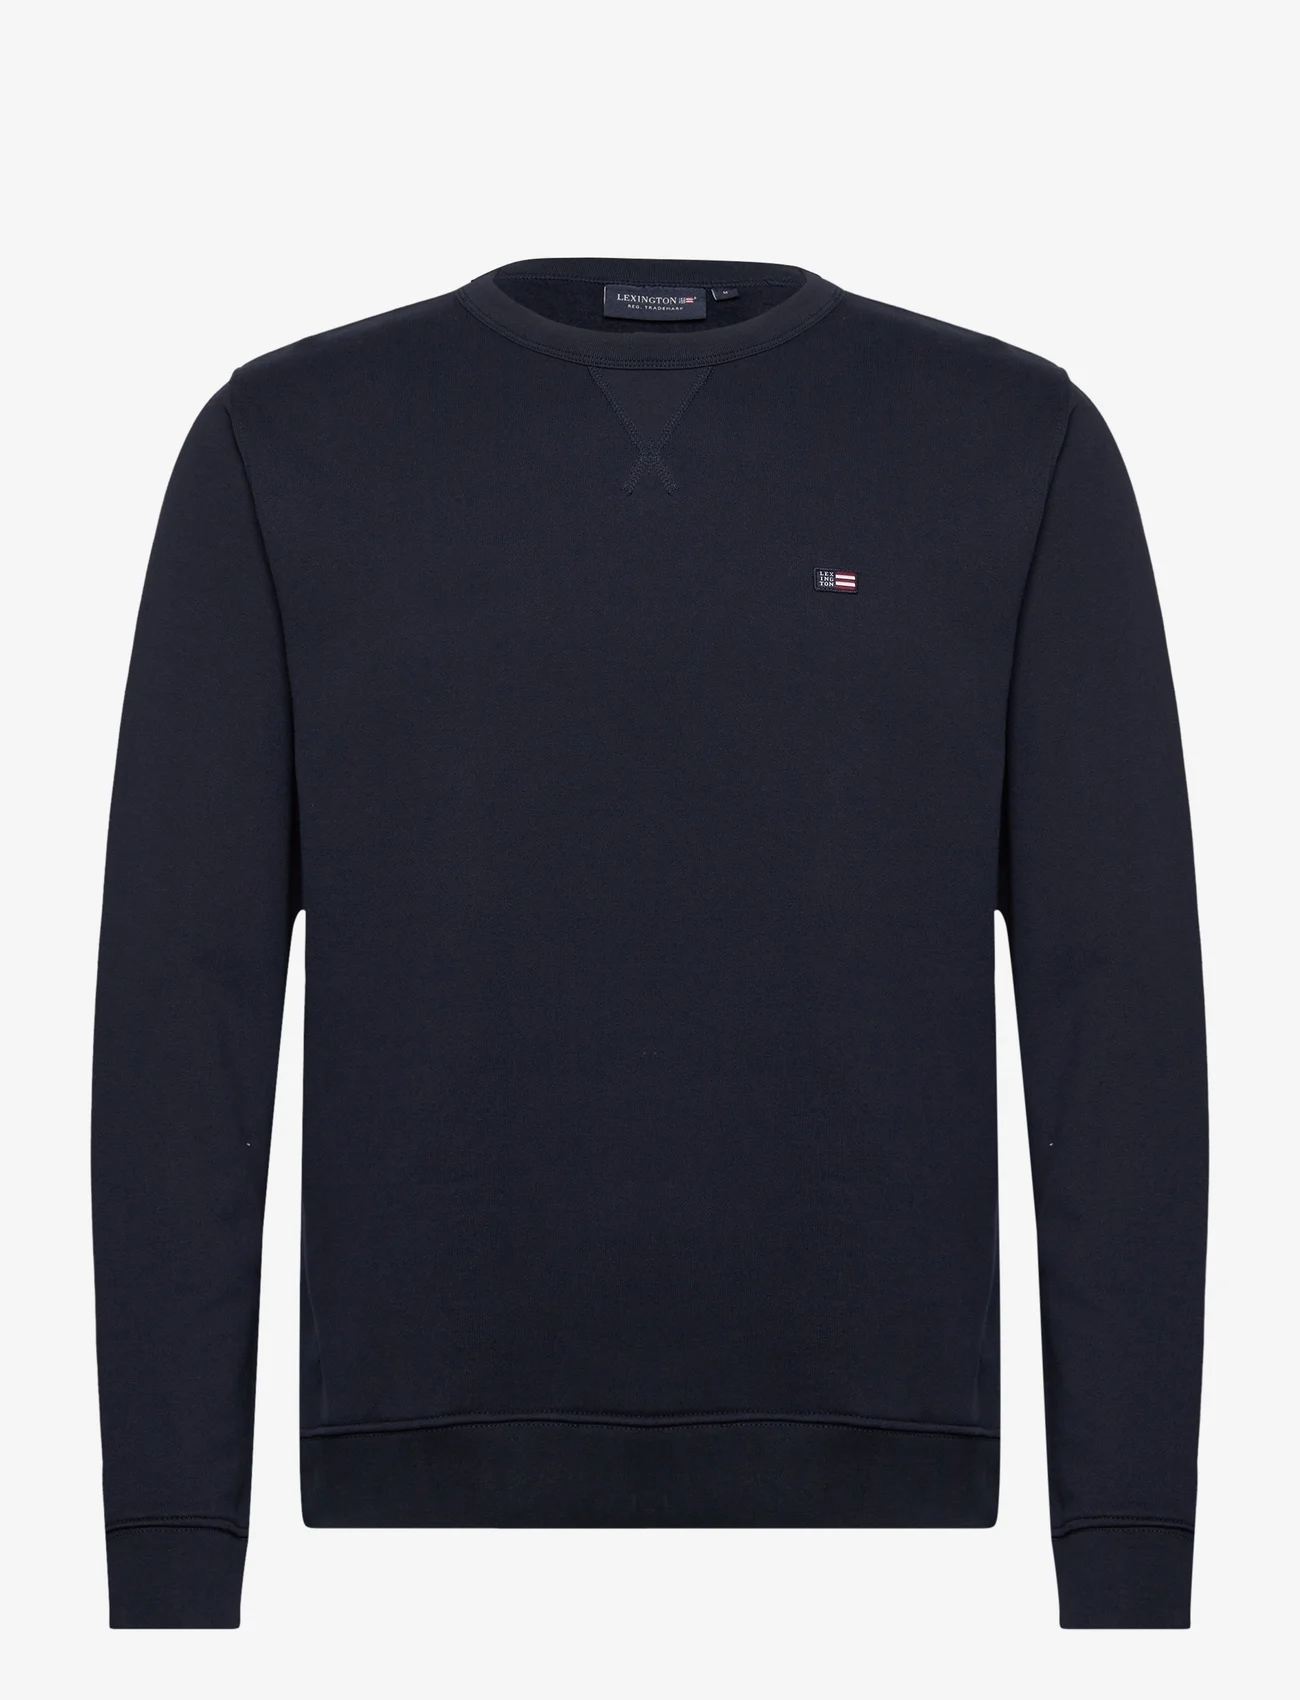 Lexington Clothing - Matteo Organic Cotton Crew Sweatshirt - sweatshirts - dark blue - 0